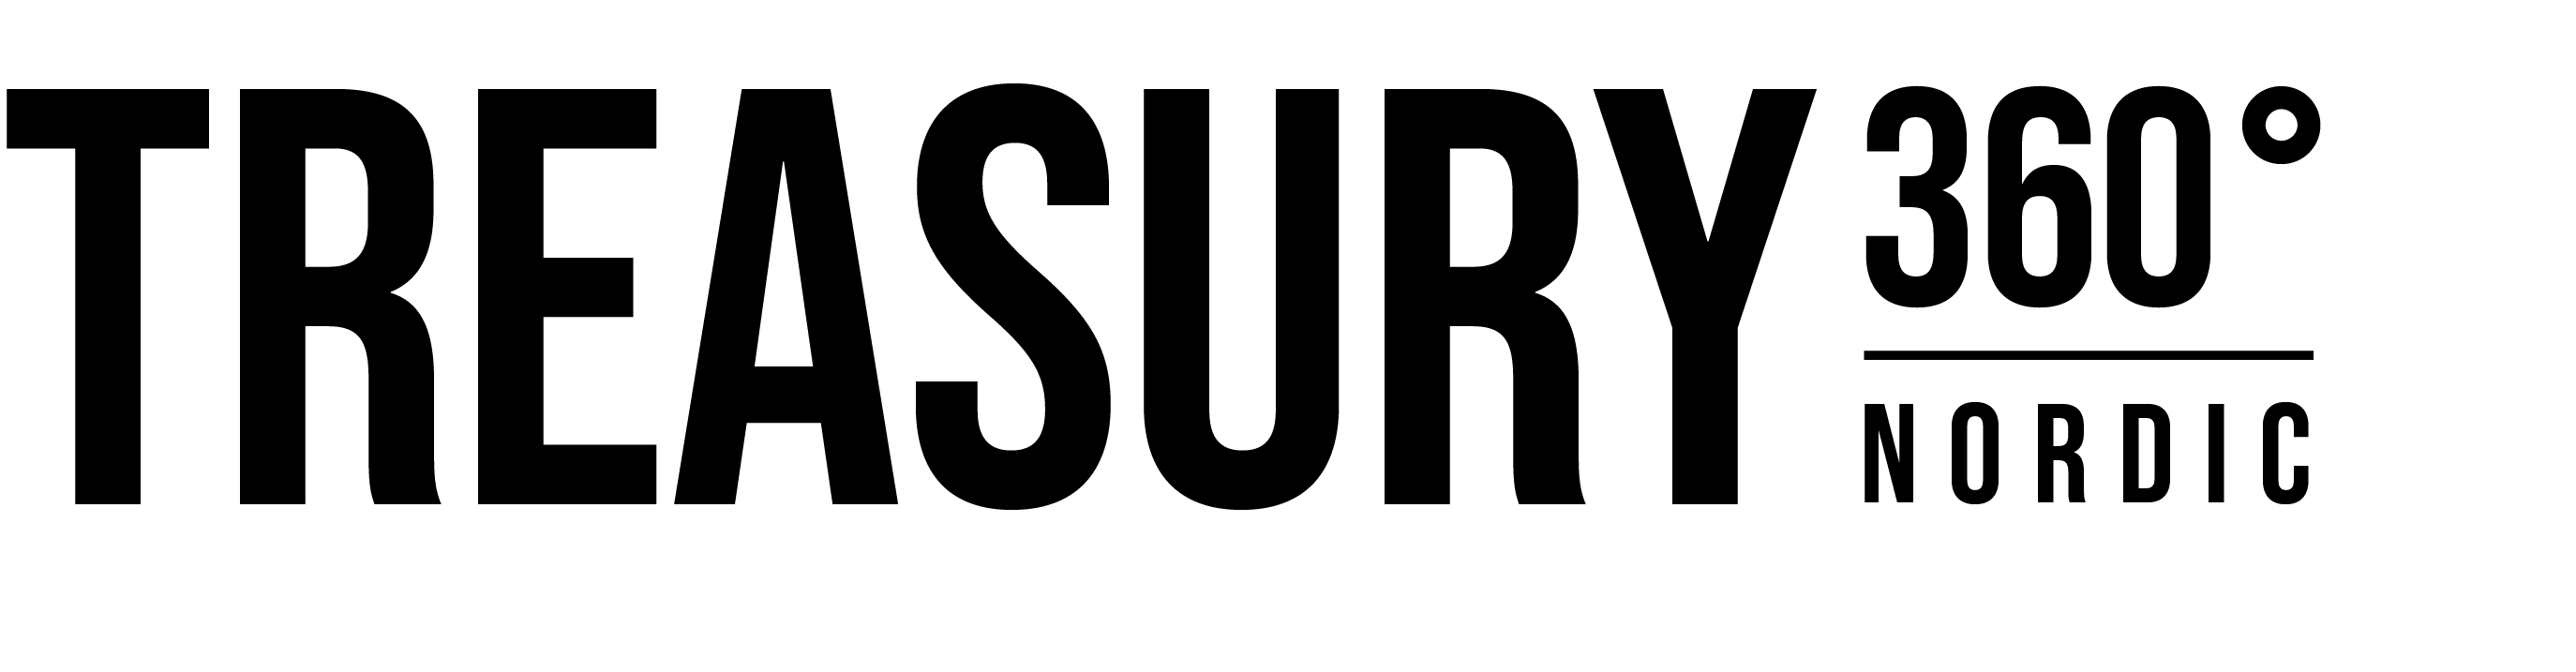 Treasury 360 Nordic logo black